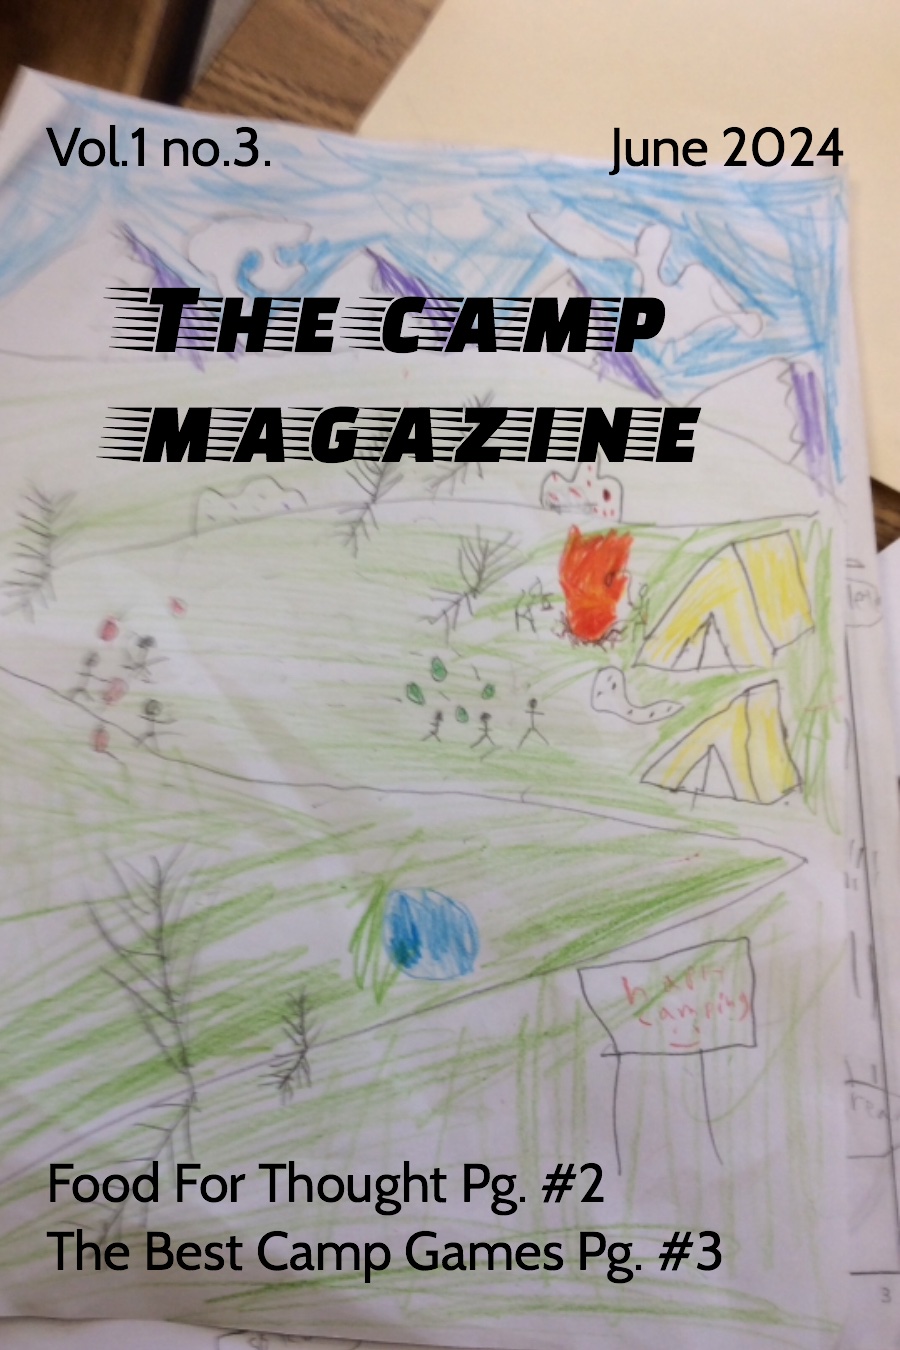 The Camp Magazine by Zain S